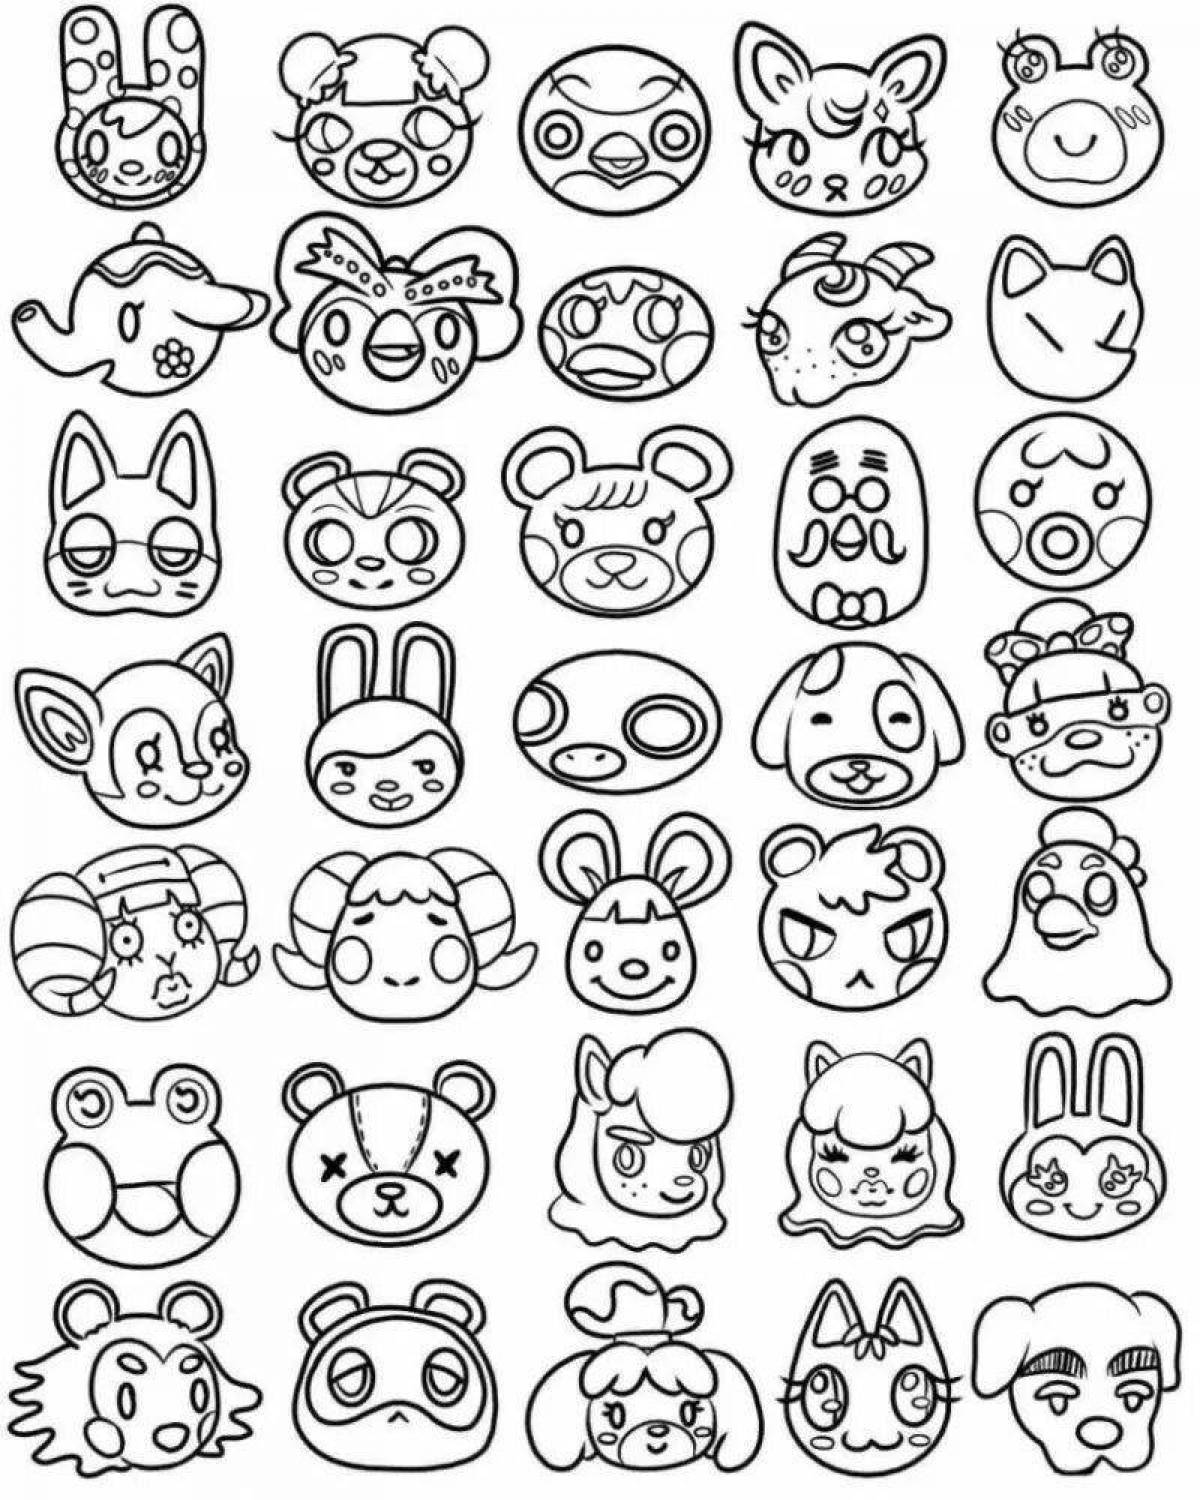 Fun kawaii animal coloring page